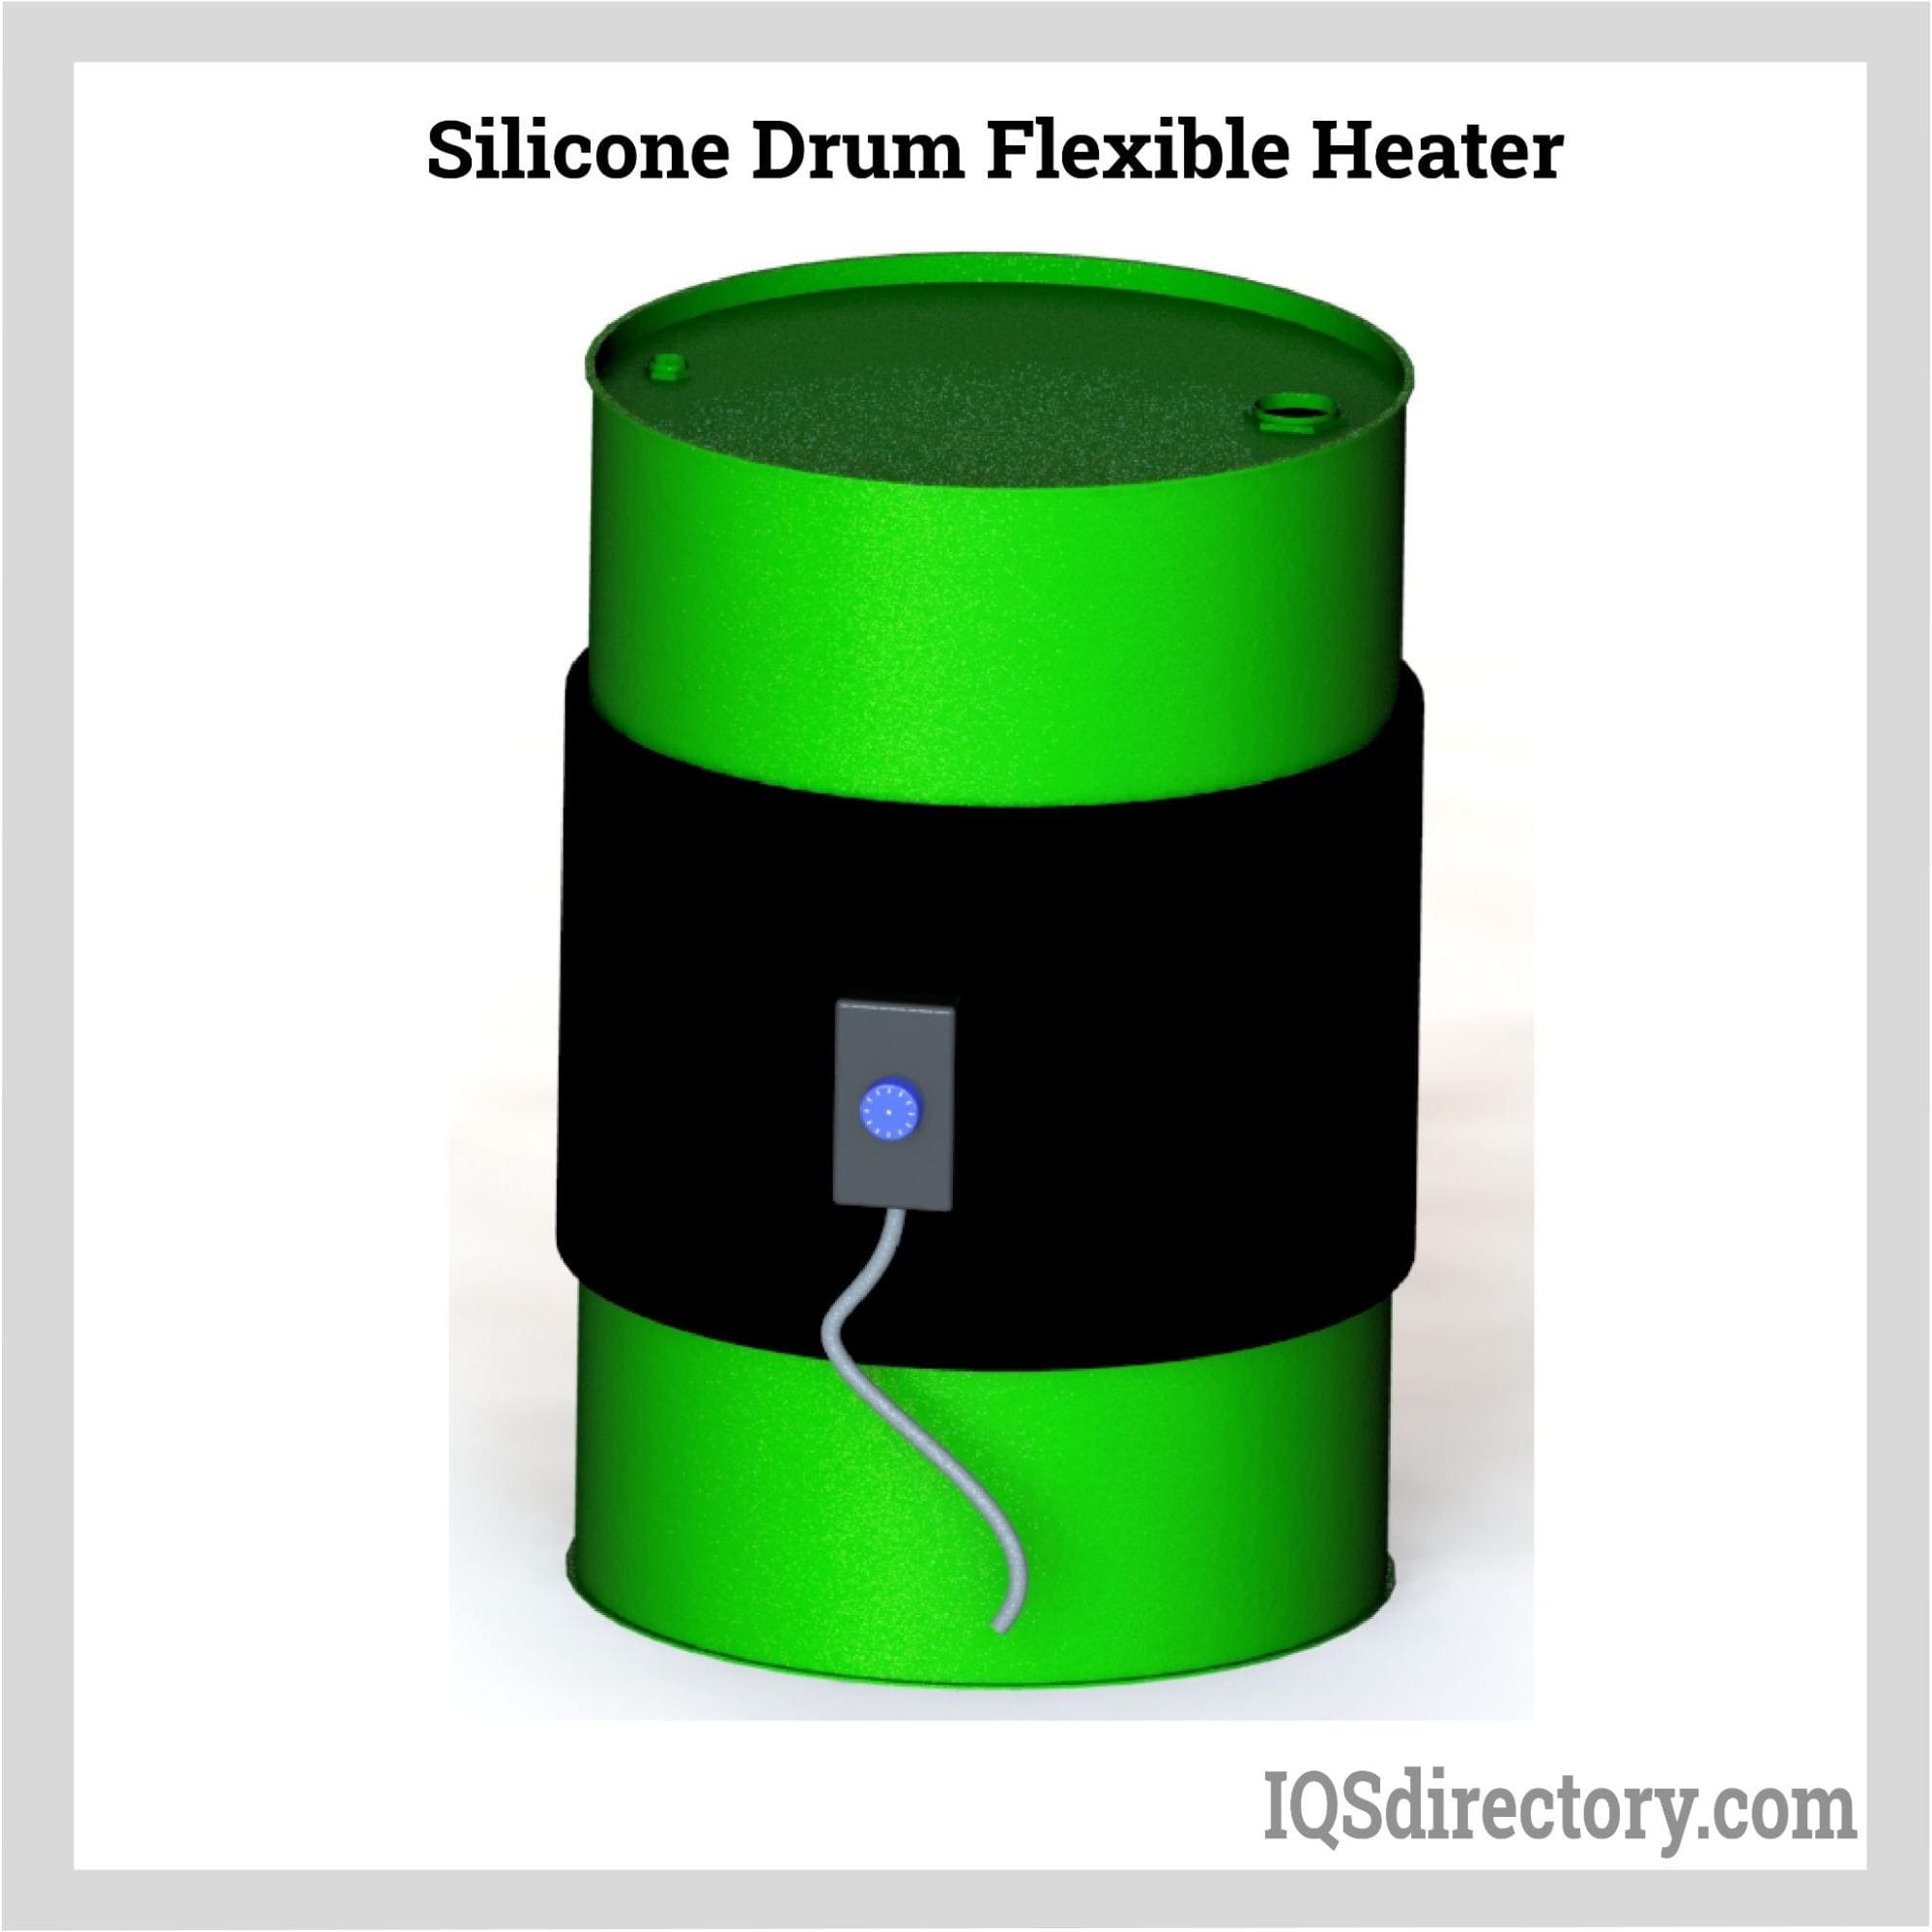 Silicone Drum Flexible Heater